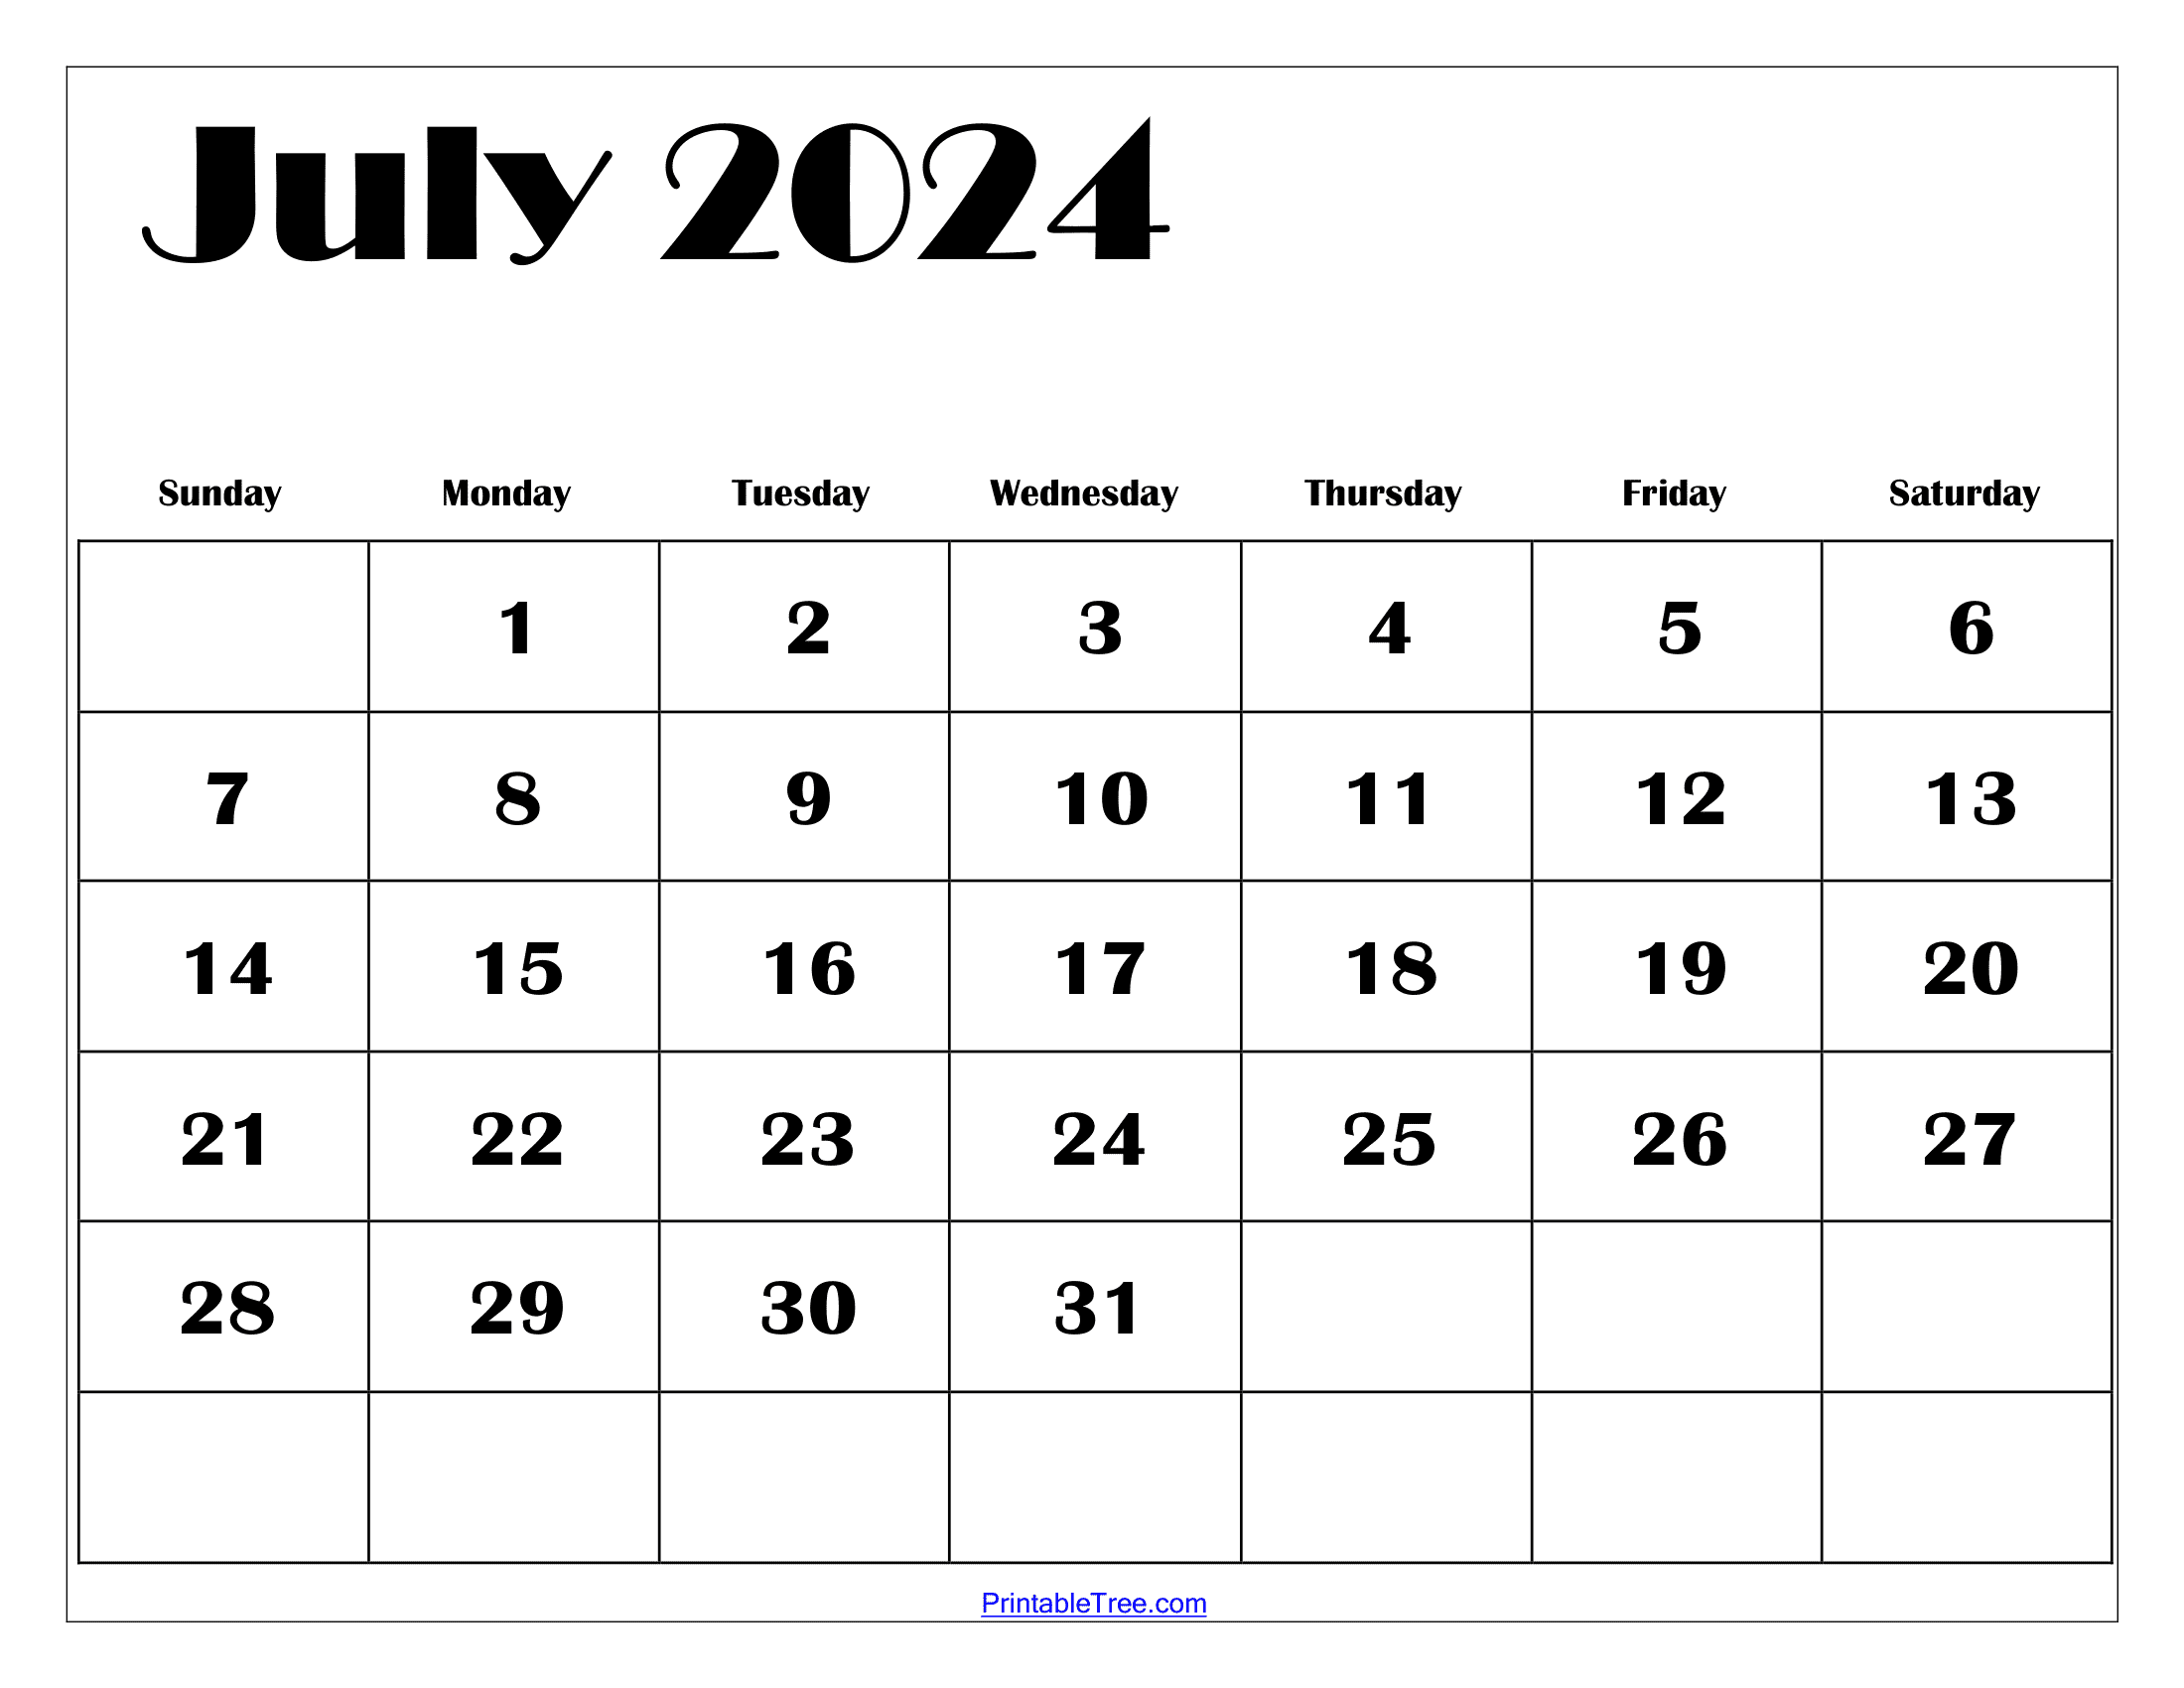 July 2024 Calendar Printable Pdf With Holidays Free Template for July 2024 Calendar With Holidays Printable